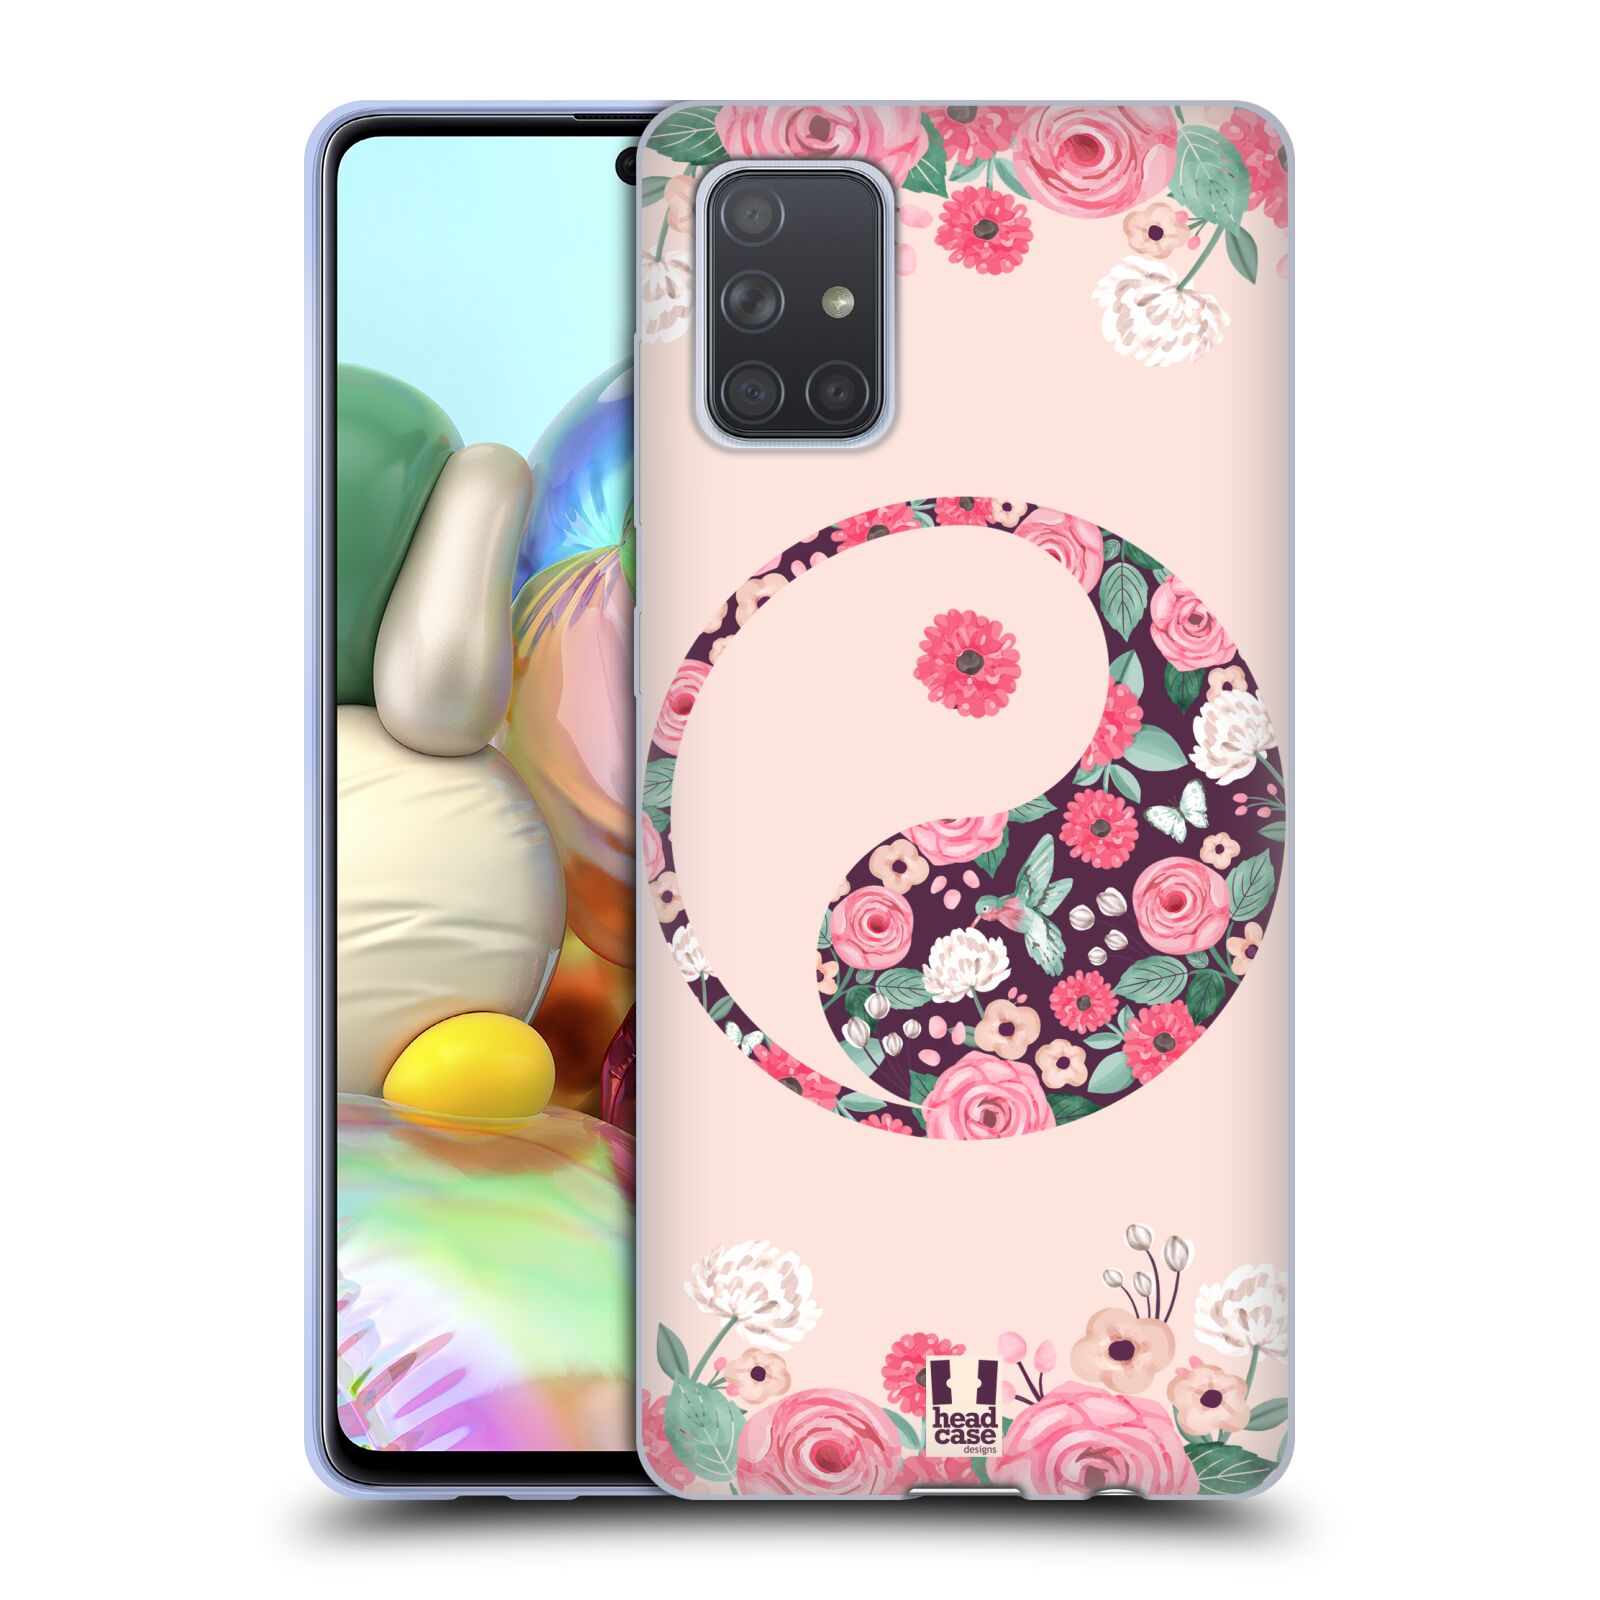 Silikonové pouzdro na mobil Samsung Galaxy A71 - Head Case - Yin a Yang Floral (Silikonový kryt, obal, pouzdro na mobilní telefon Samsung Galaxy A71 A715F Dual SIM s motivem Yin a Yang Floral)